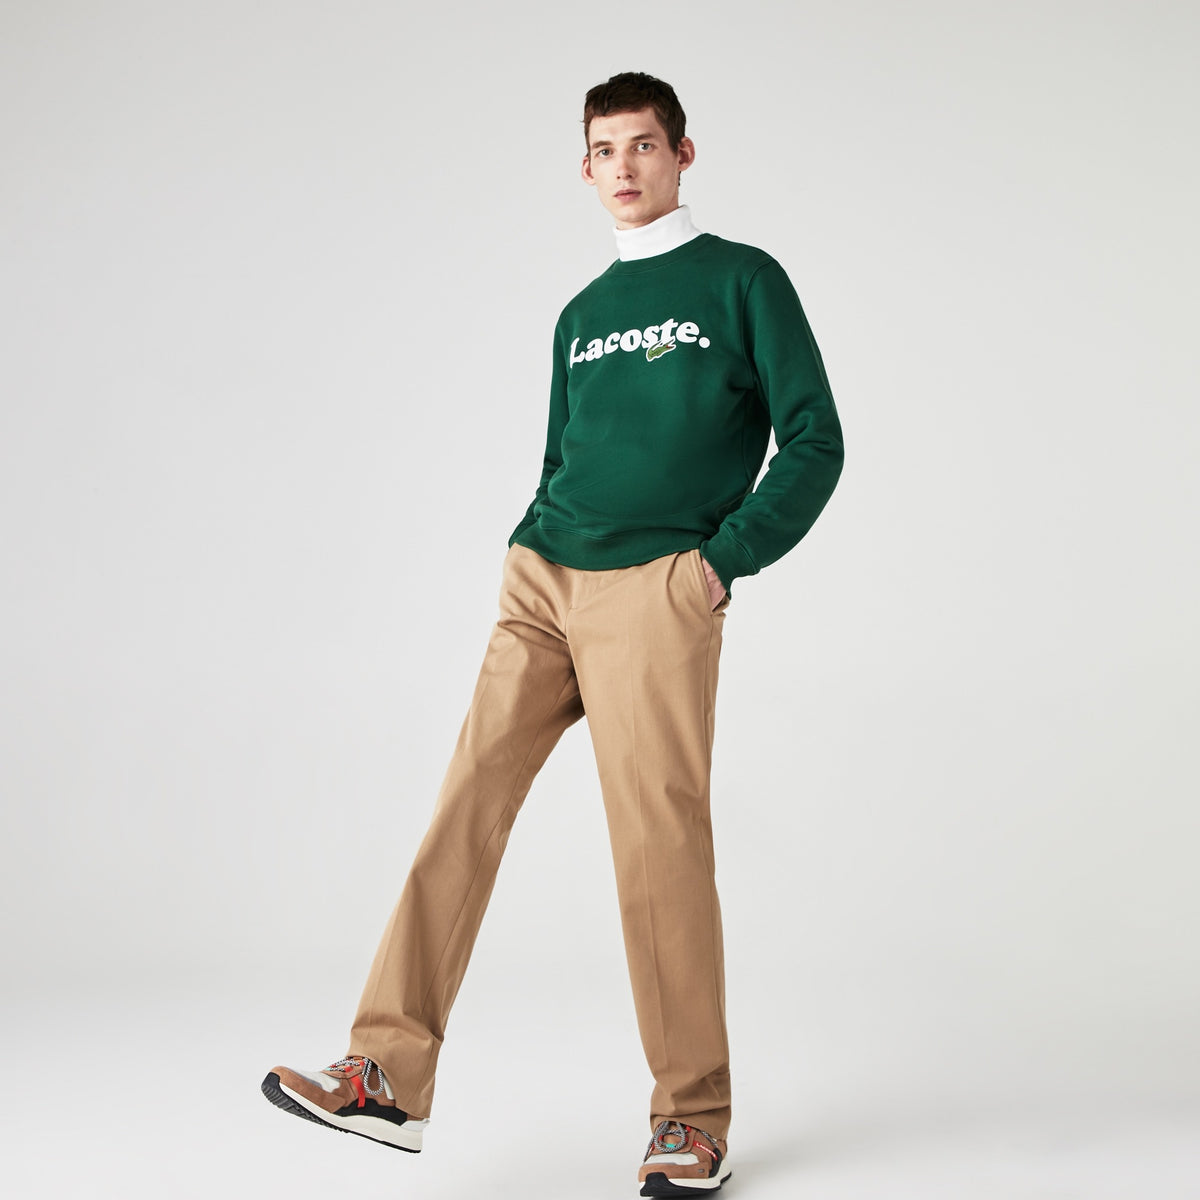 LaCoste-Lacoste And Crocodile Branded Fleece Sweatshirt-Green • 132-SH2173